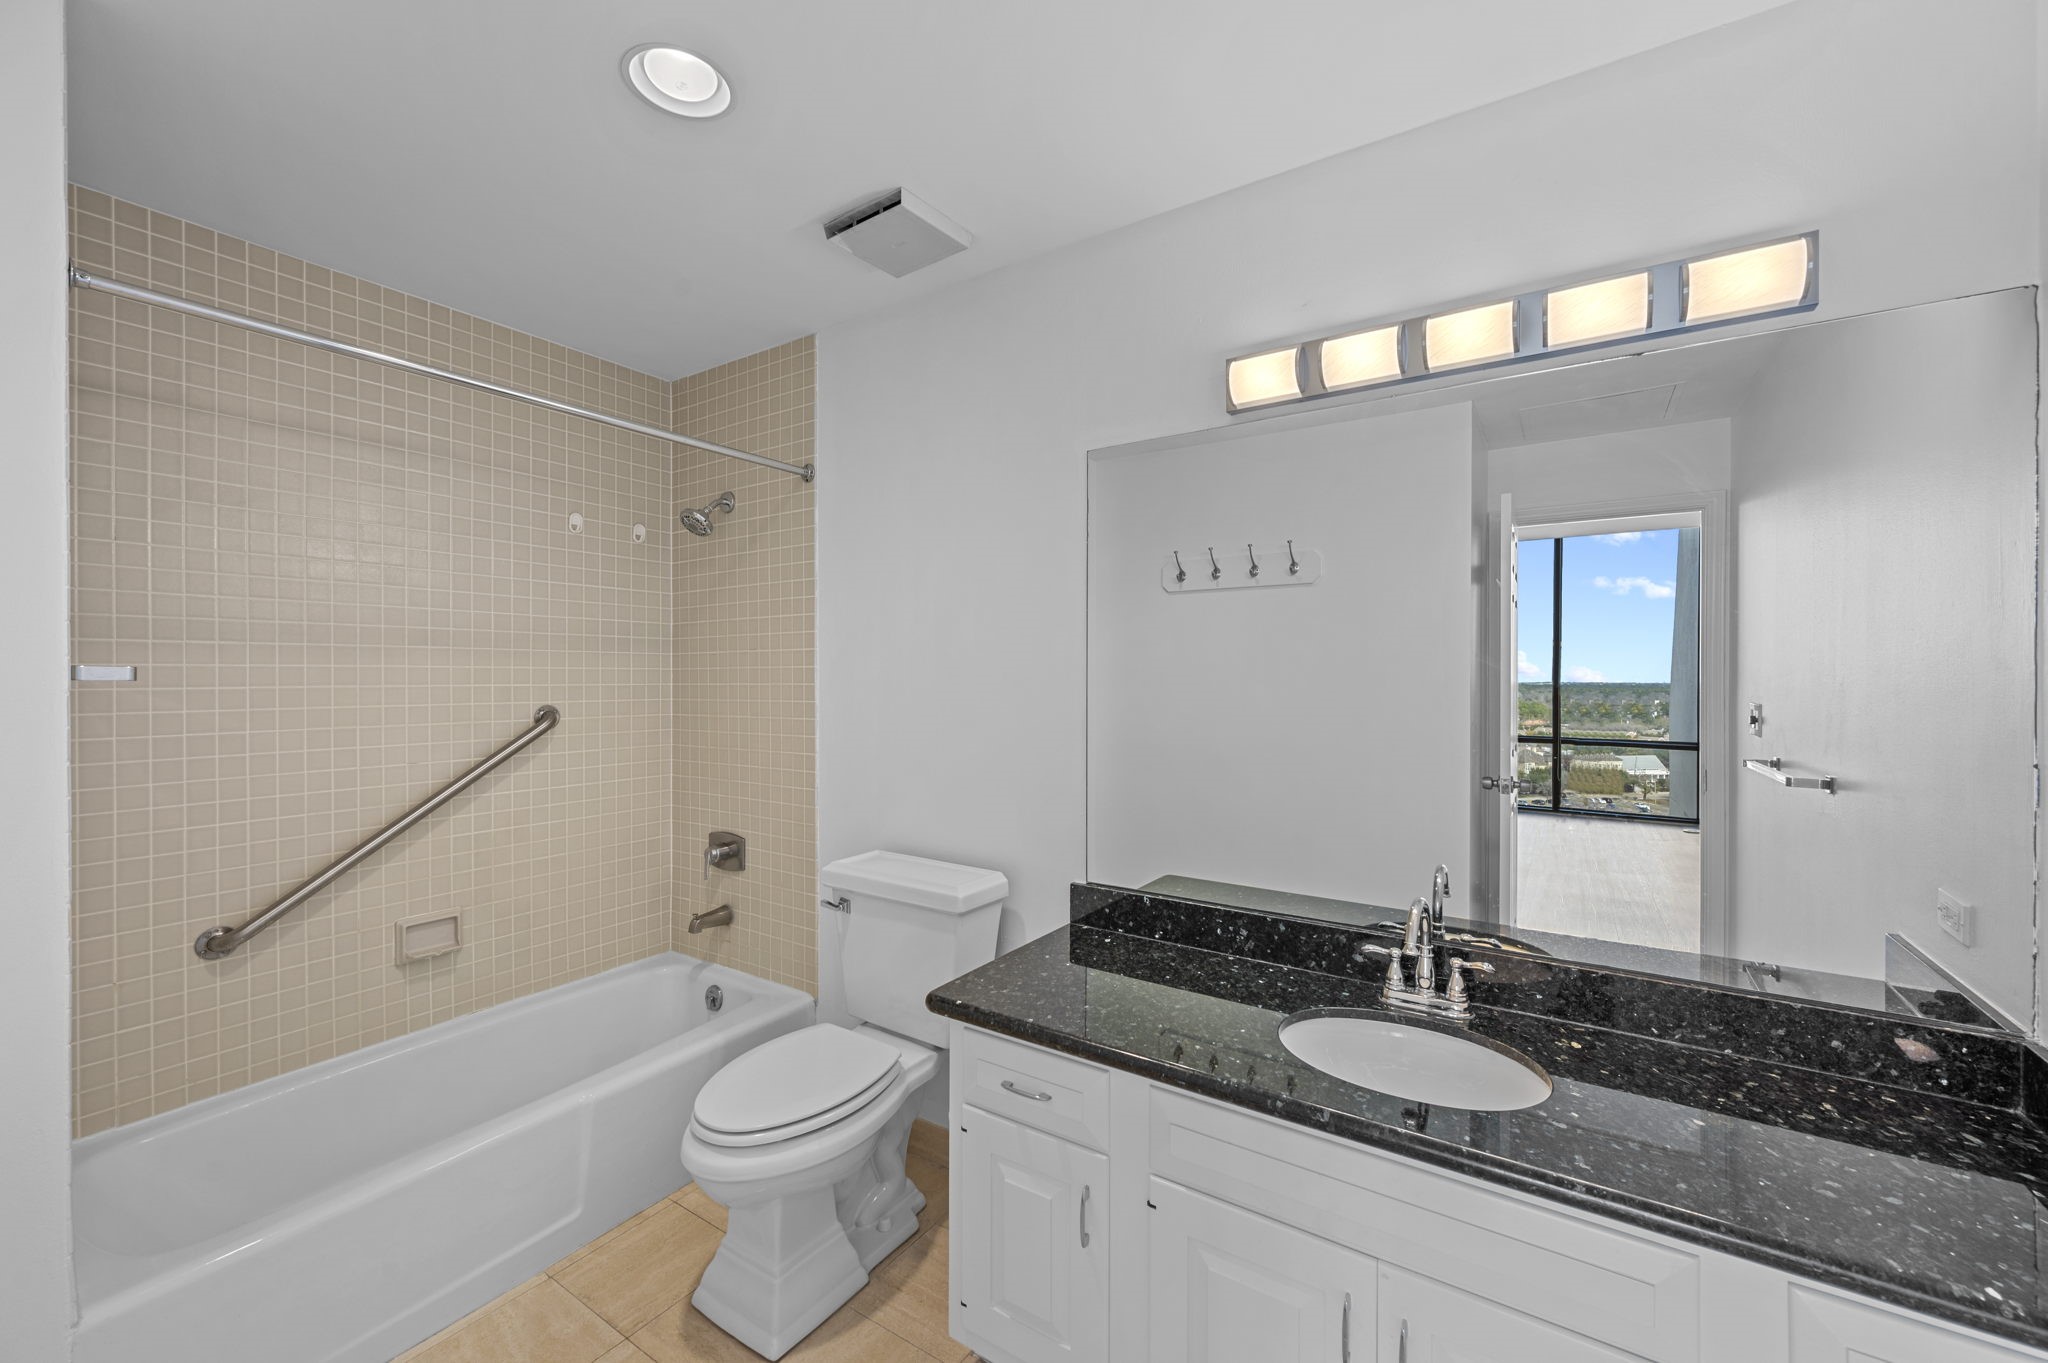 3nd full bathroom upstairs offers all bedrooms with en-suite bathrooms.